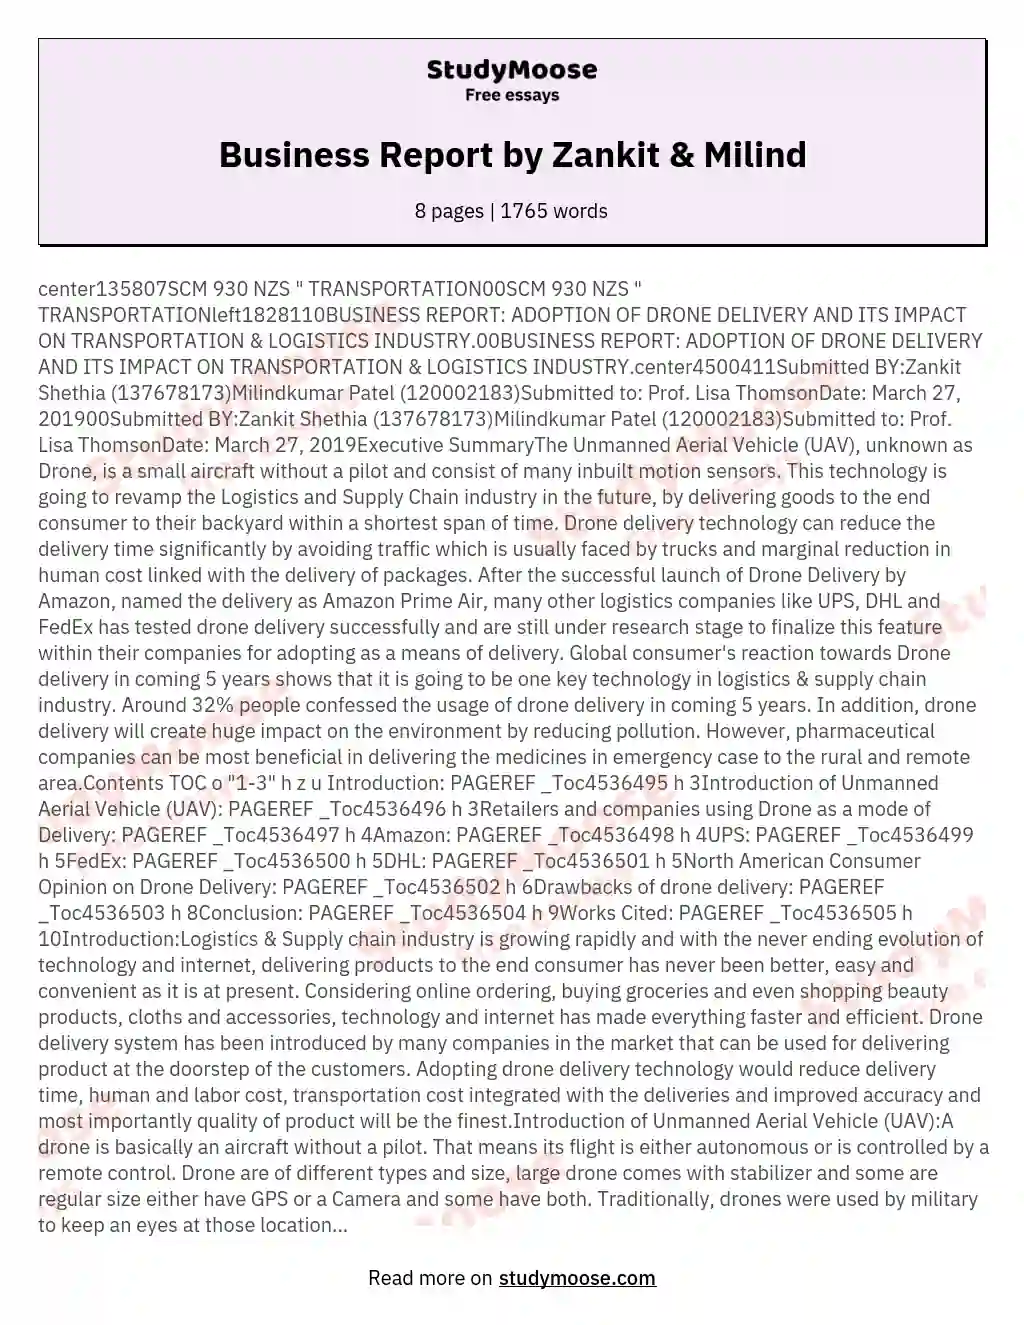 Business Report by Zankit & Milind essay